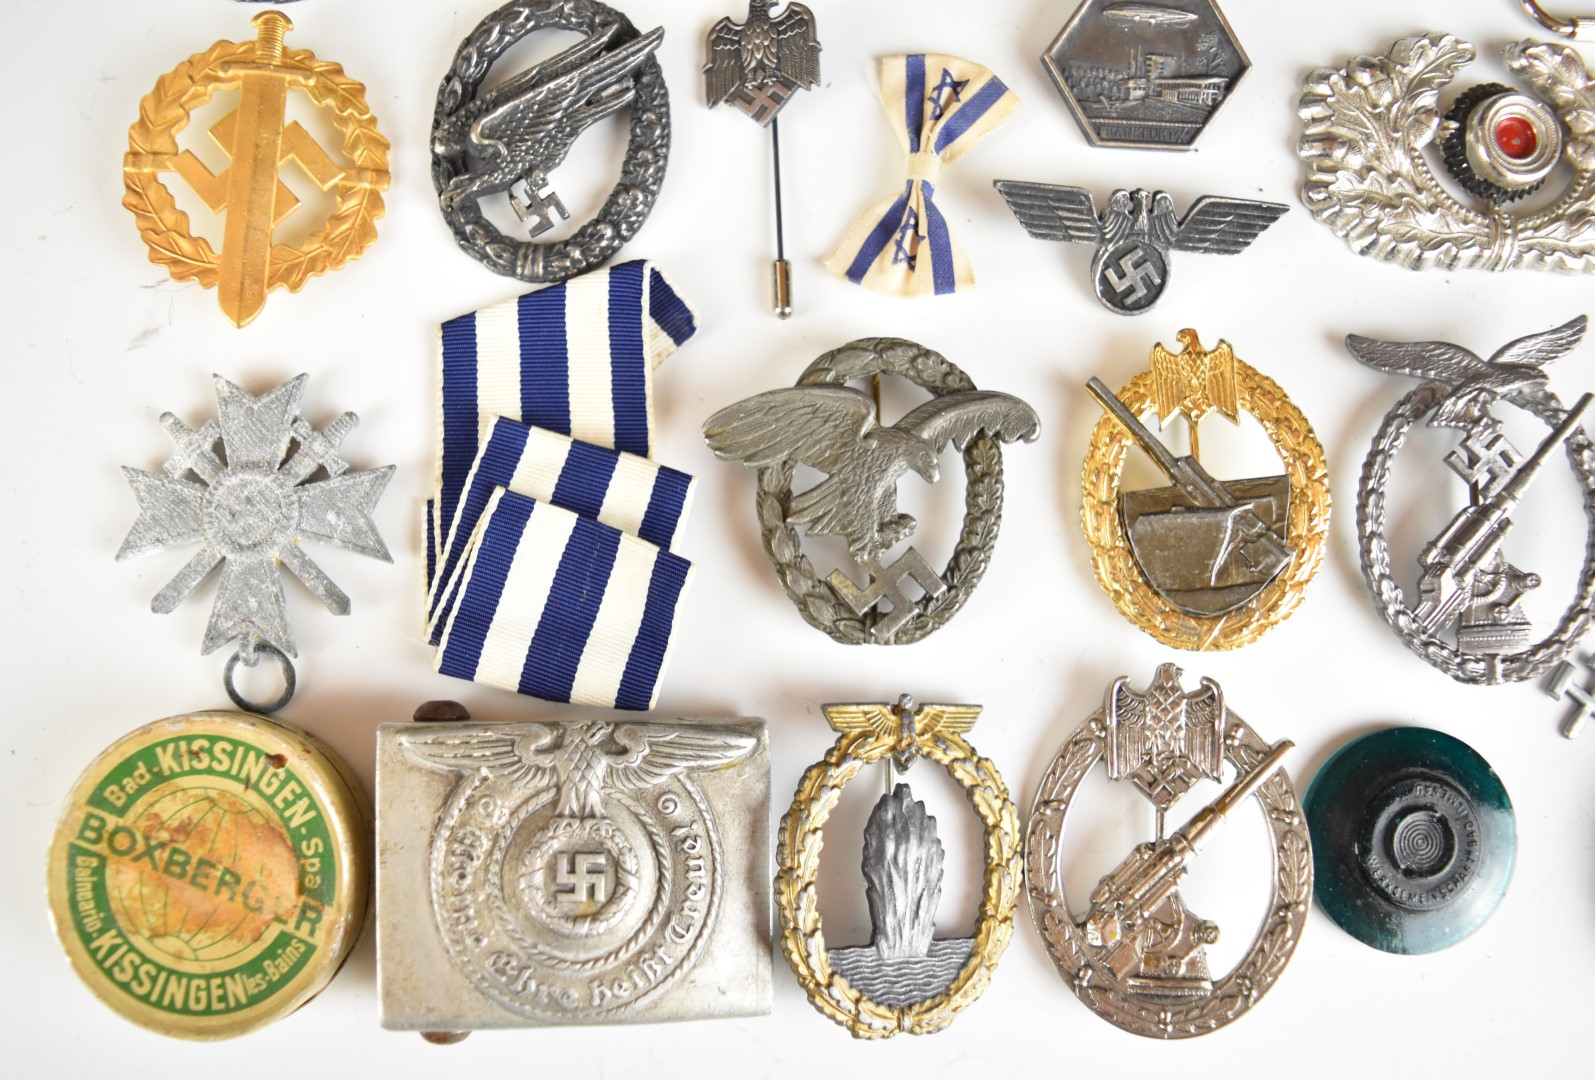 Replica German WW2 Nazi Third Reich badges, insignia and medals including High Seas Fleet, Artillery - Image 14 of 16